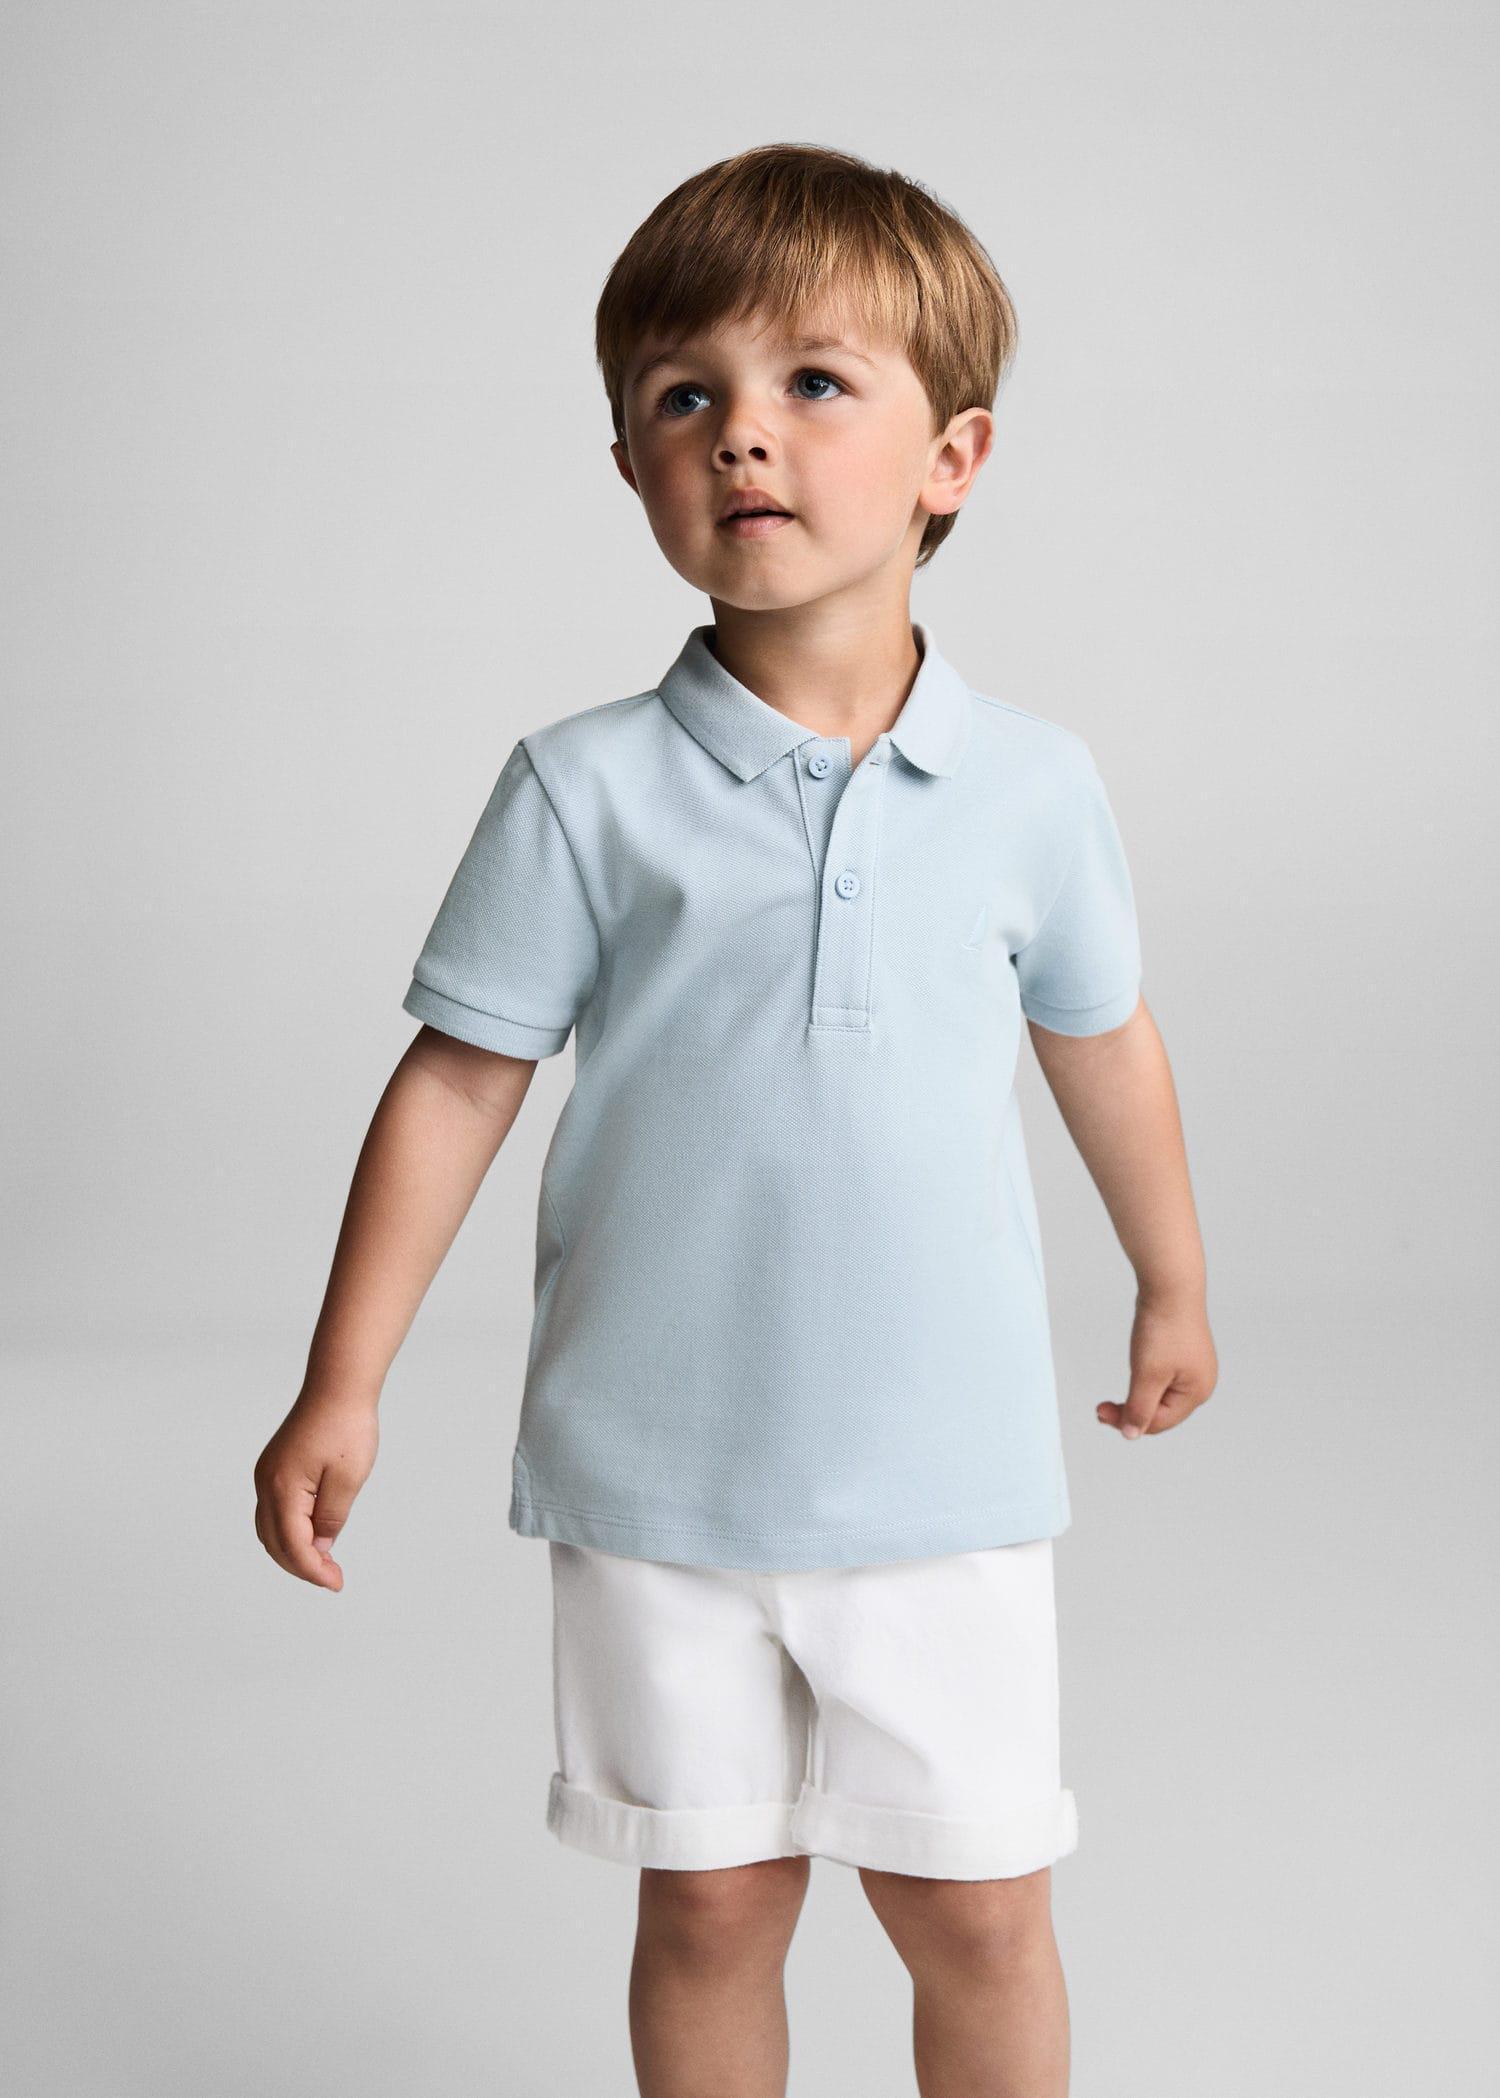 Mango - Blue Textured Cotton Polo Shirt, Kids Boys